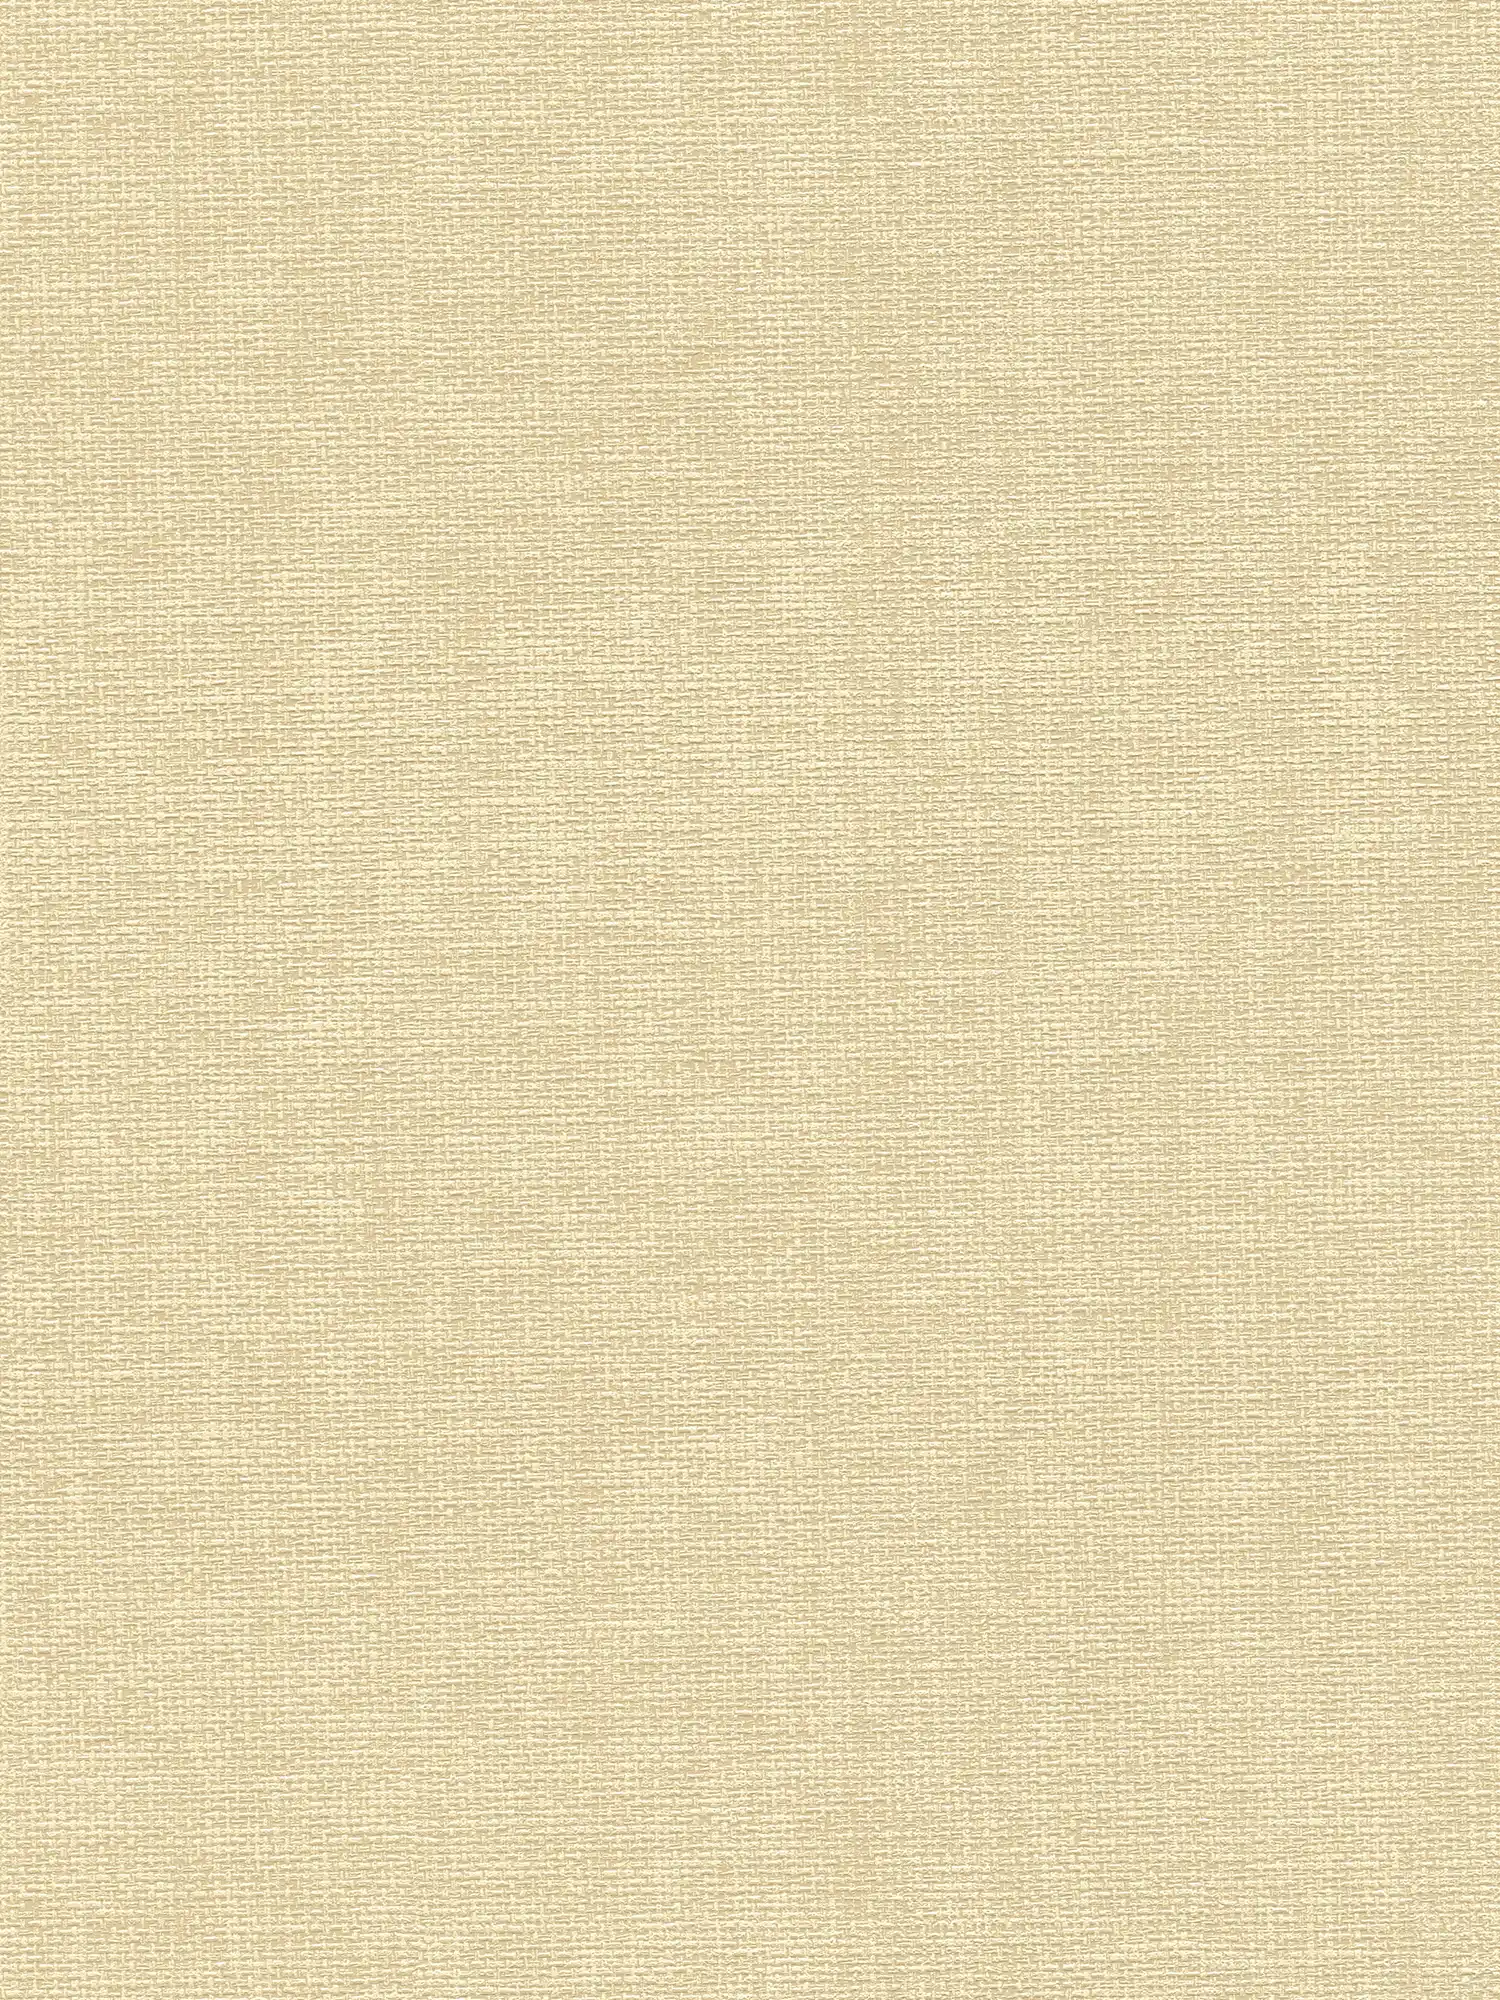 Scandi style fabric texture wallpaper - beige, yellow
